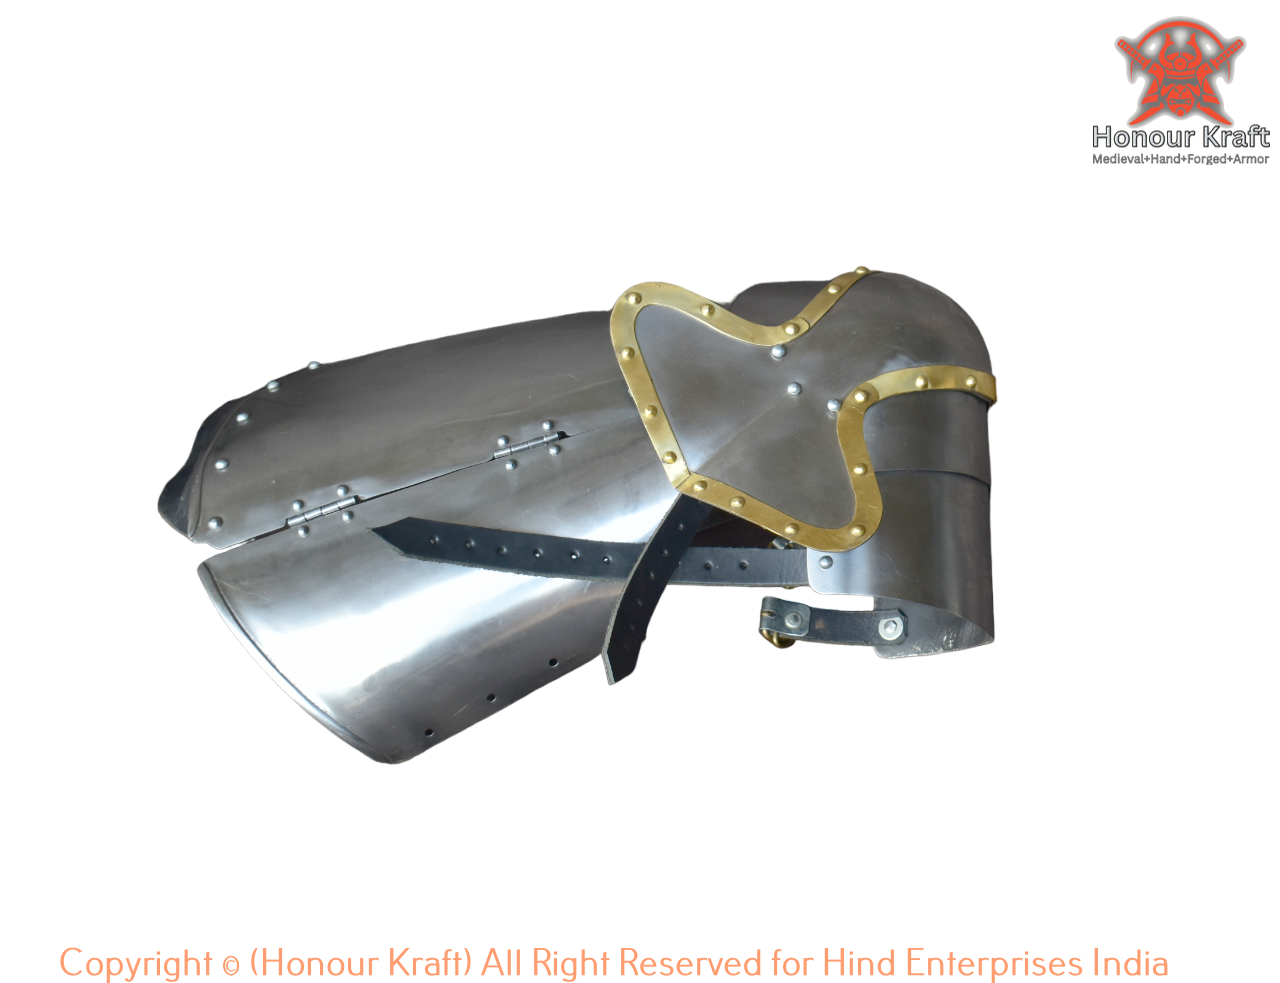 Steel legs armor medieval 14th century Italian Thai armor pair for Hard combat Buhurt HMB Armored